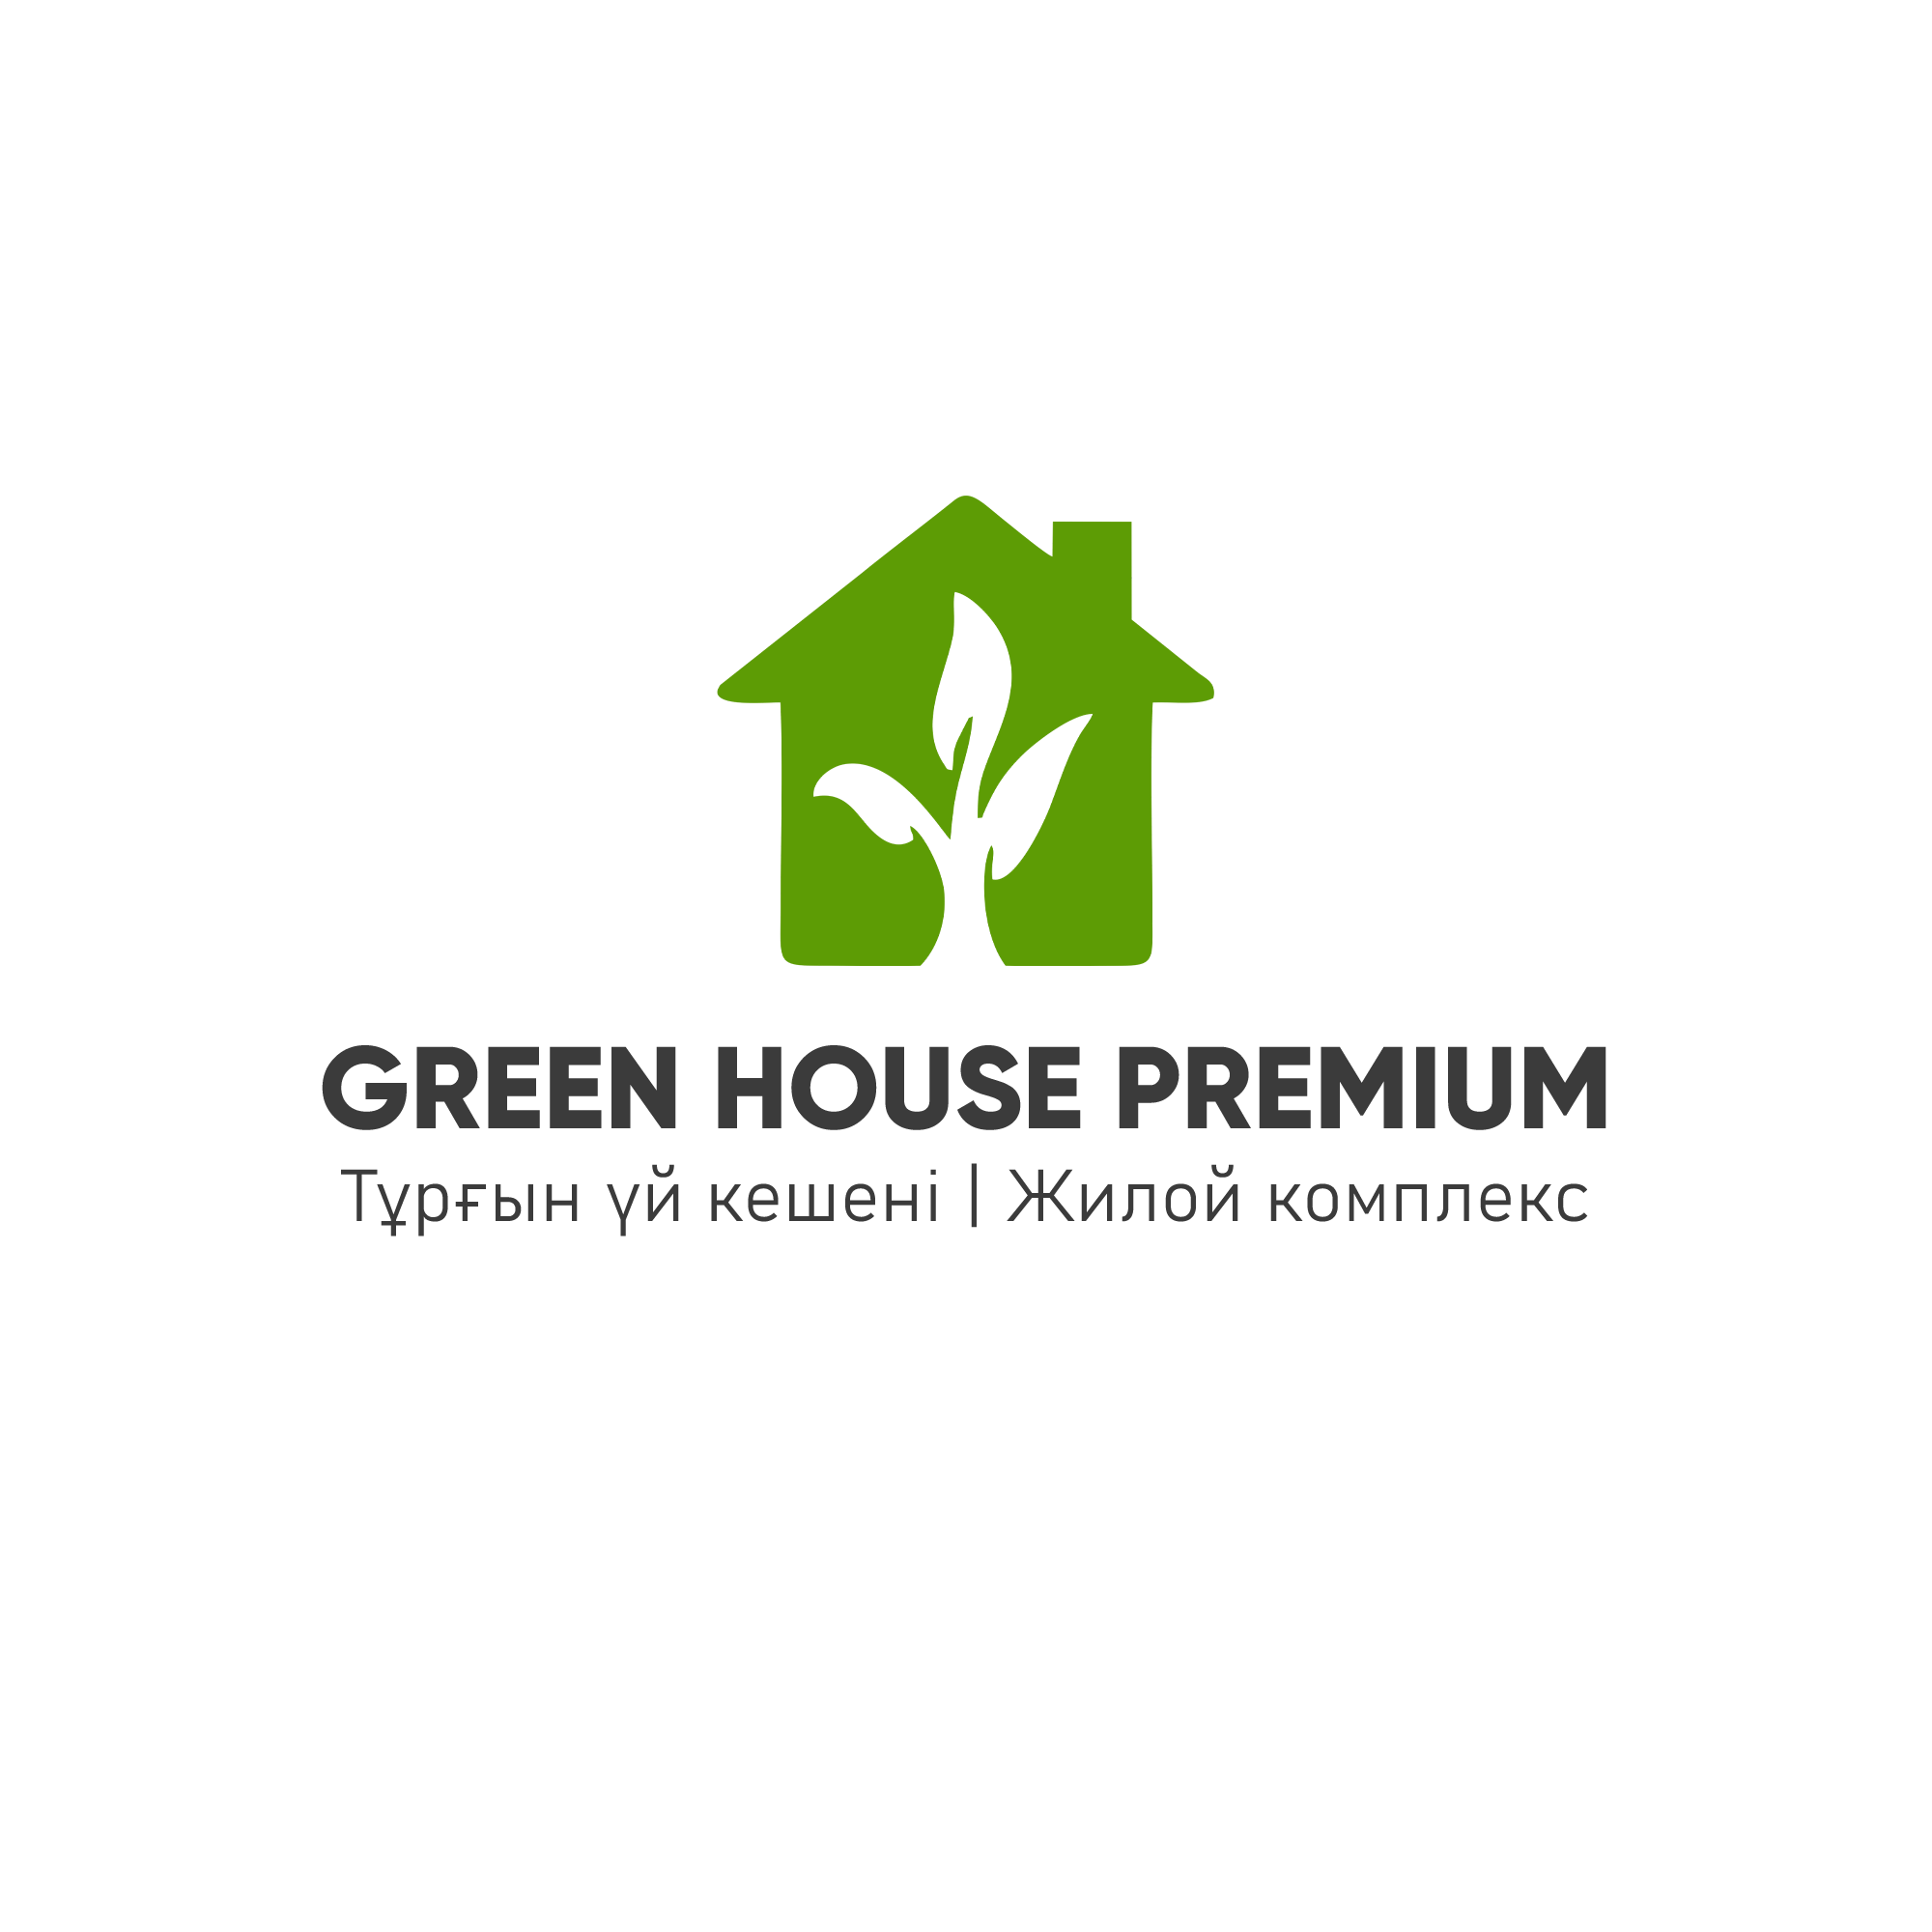 Green House Premium